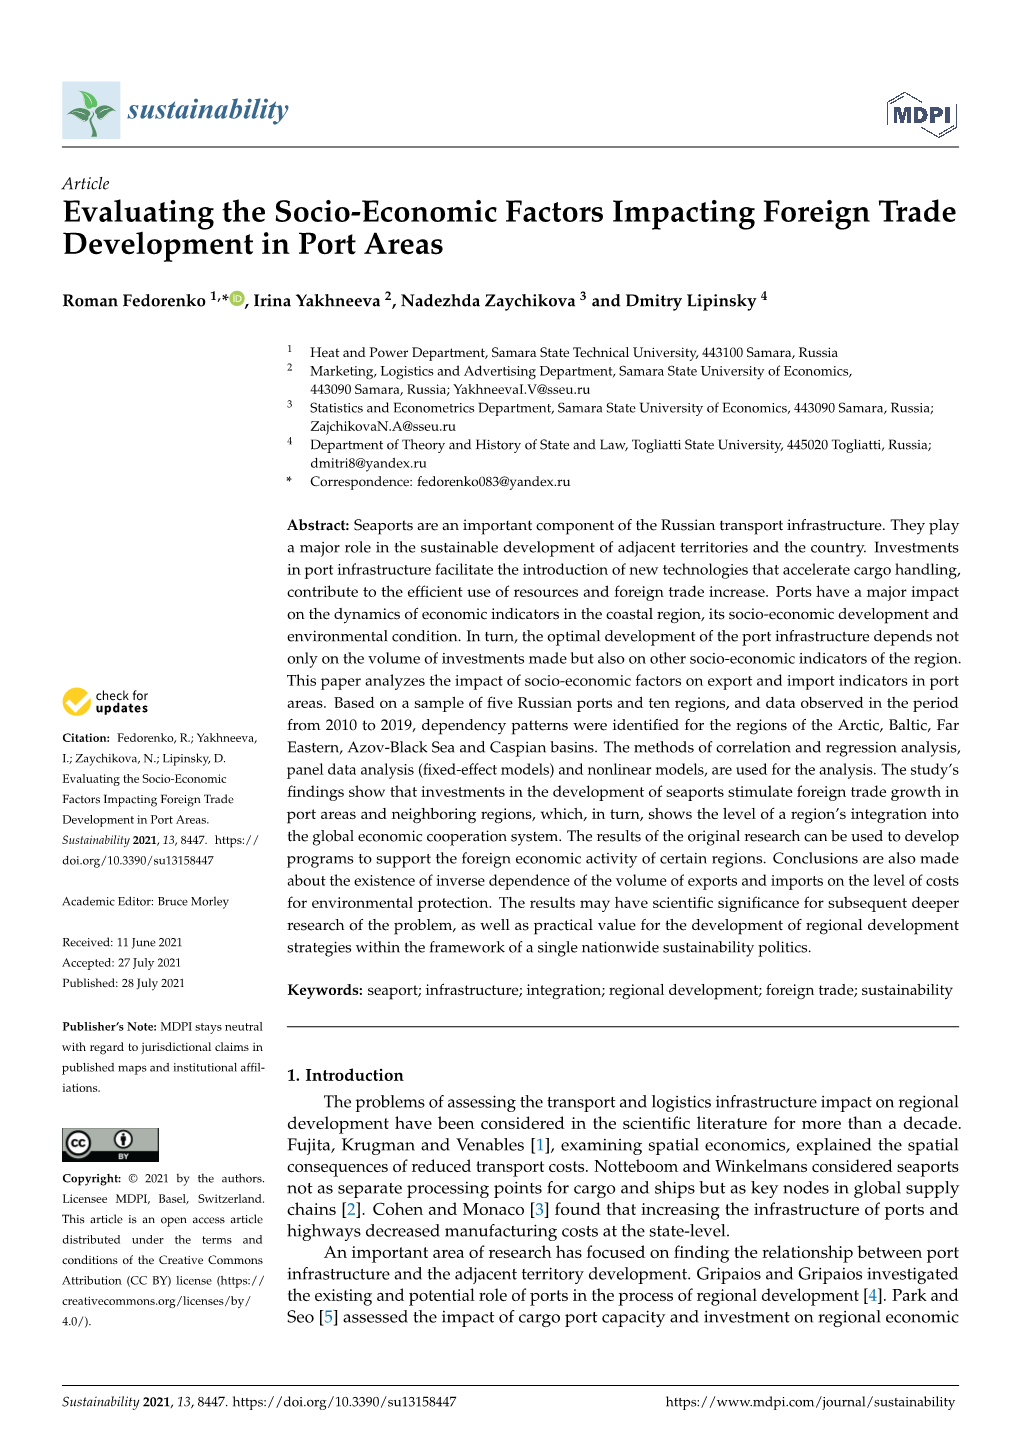 Evaluating the Socio-Economic Factors Impacting Foreign Trade Development in Port Areas